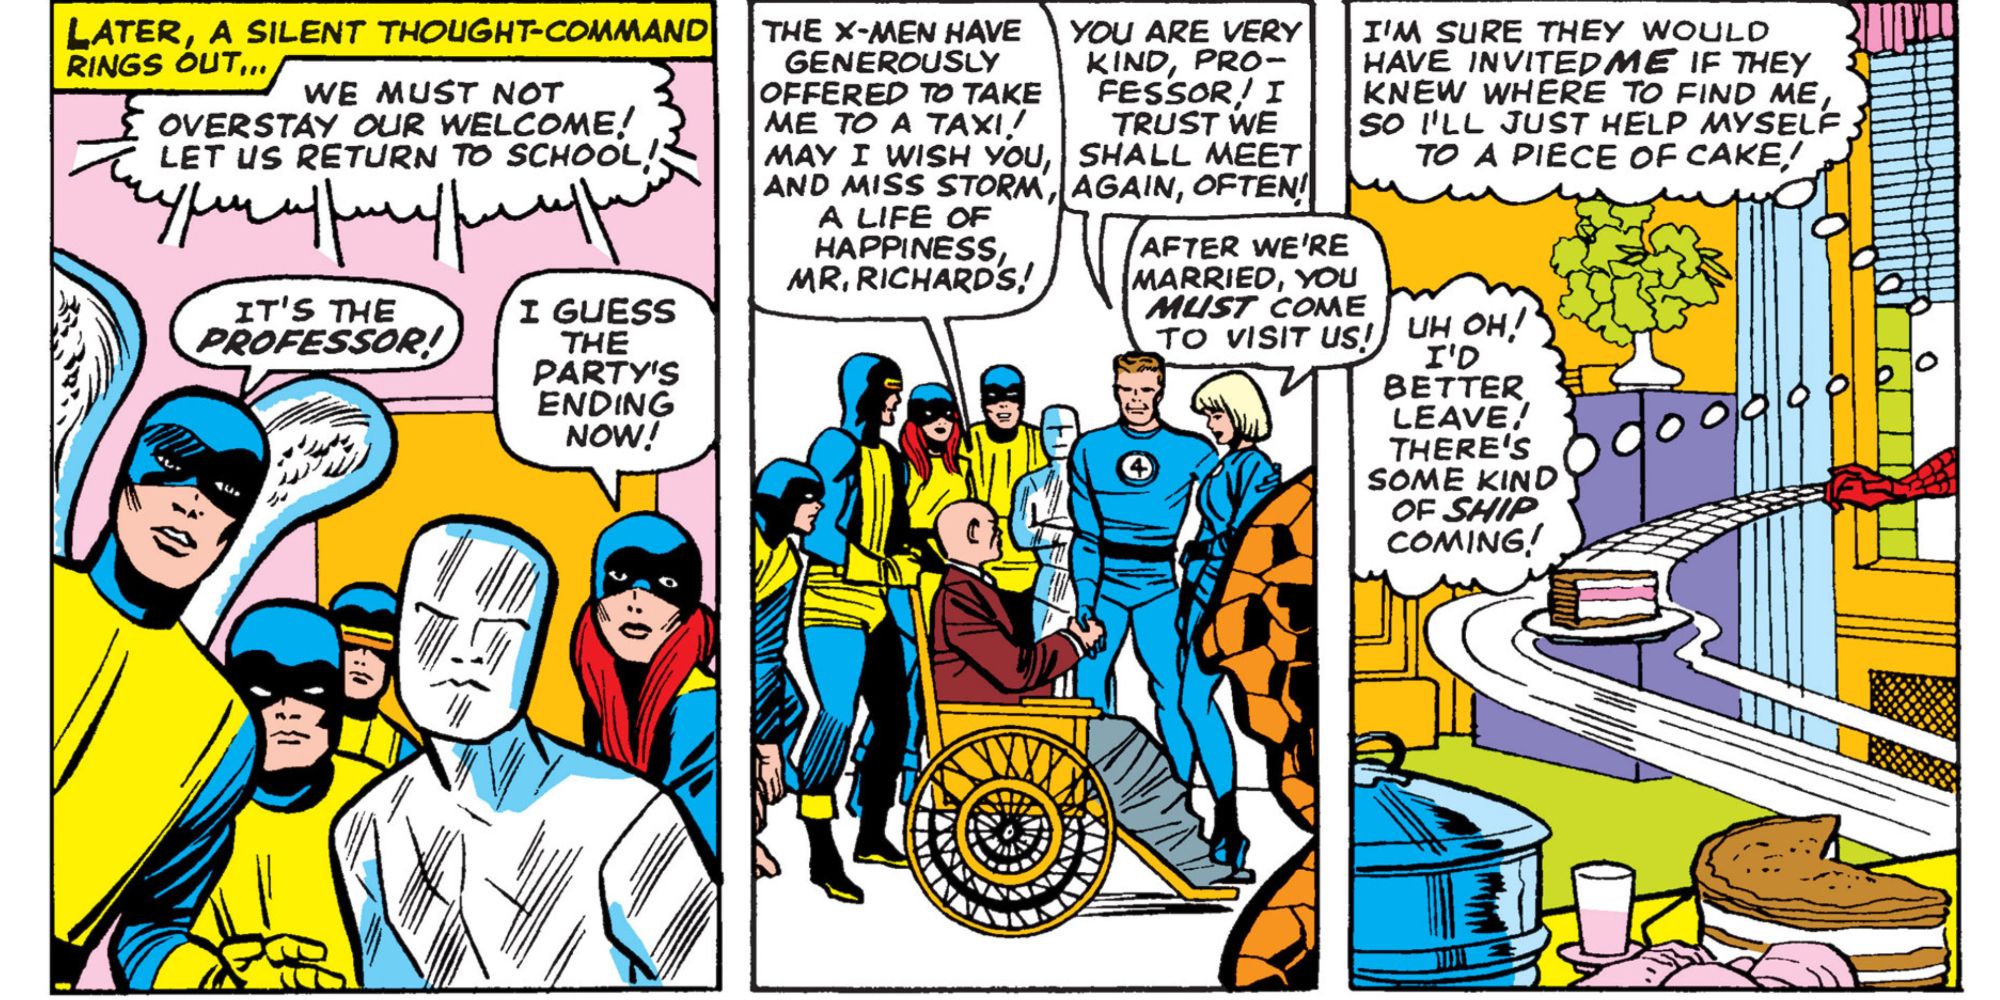 Spider-Man steals a slice of cake in Marvel Comics.